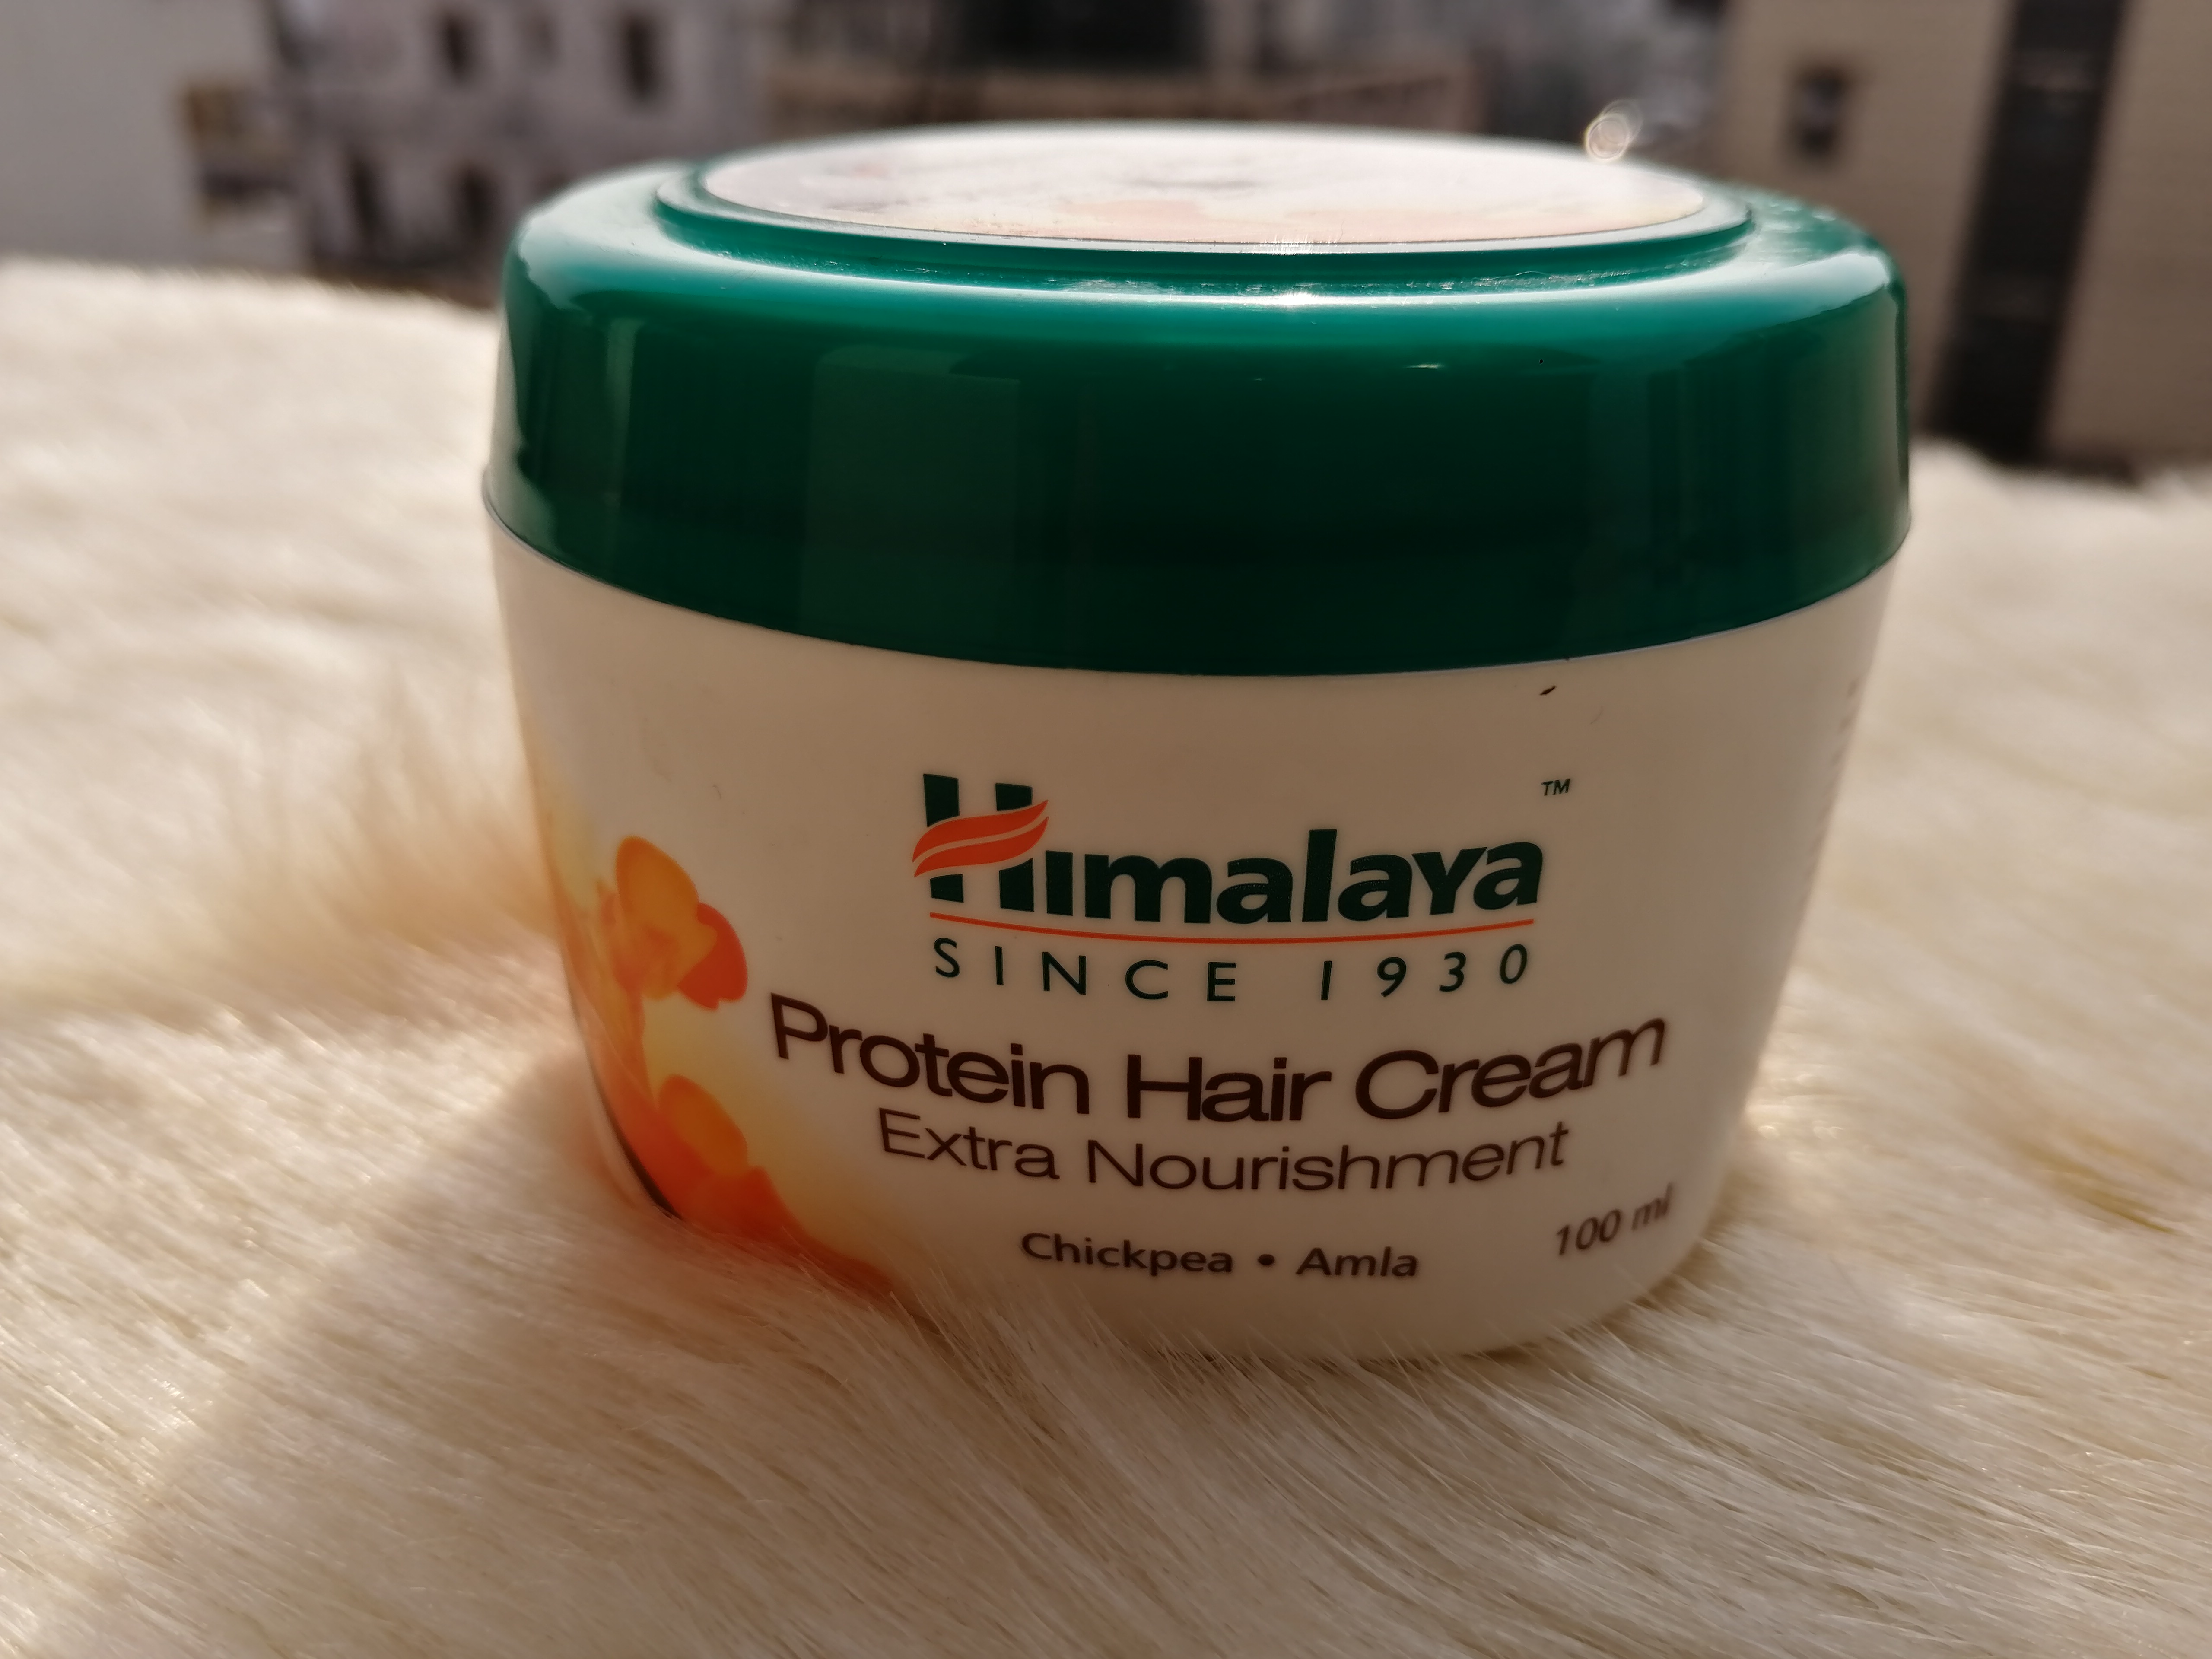 Himalaya Herbals Protein Hair Cream| Review